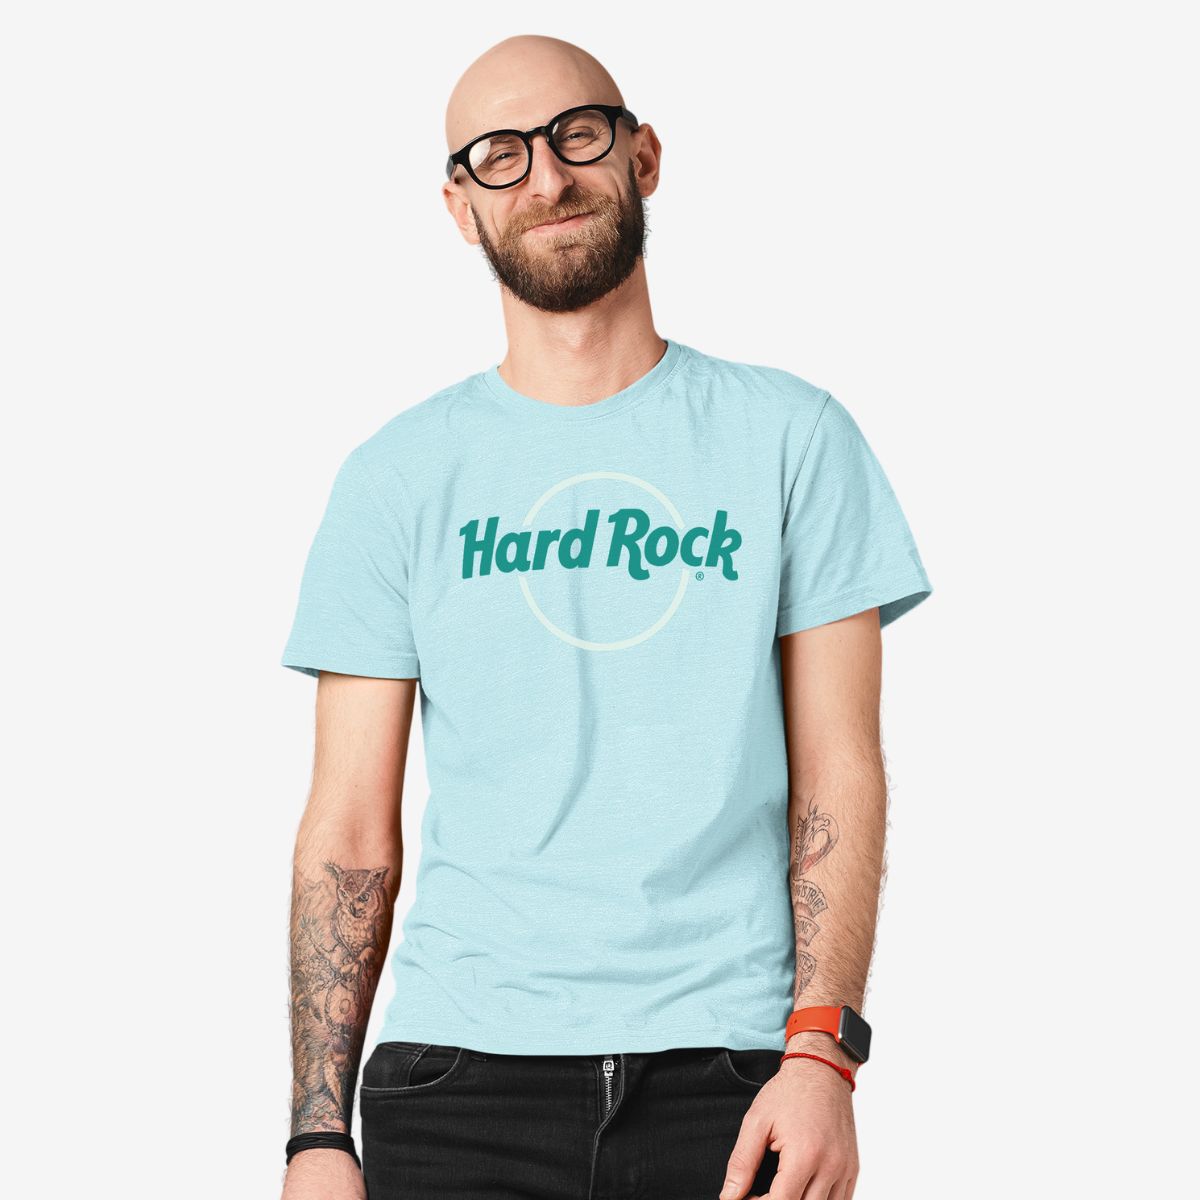 Hard Rock Adult Fit Pop of Color Tee in Aqua image number 1